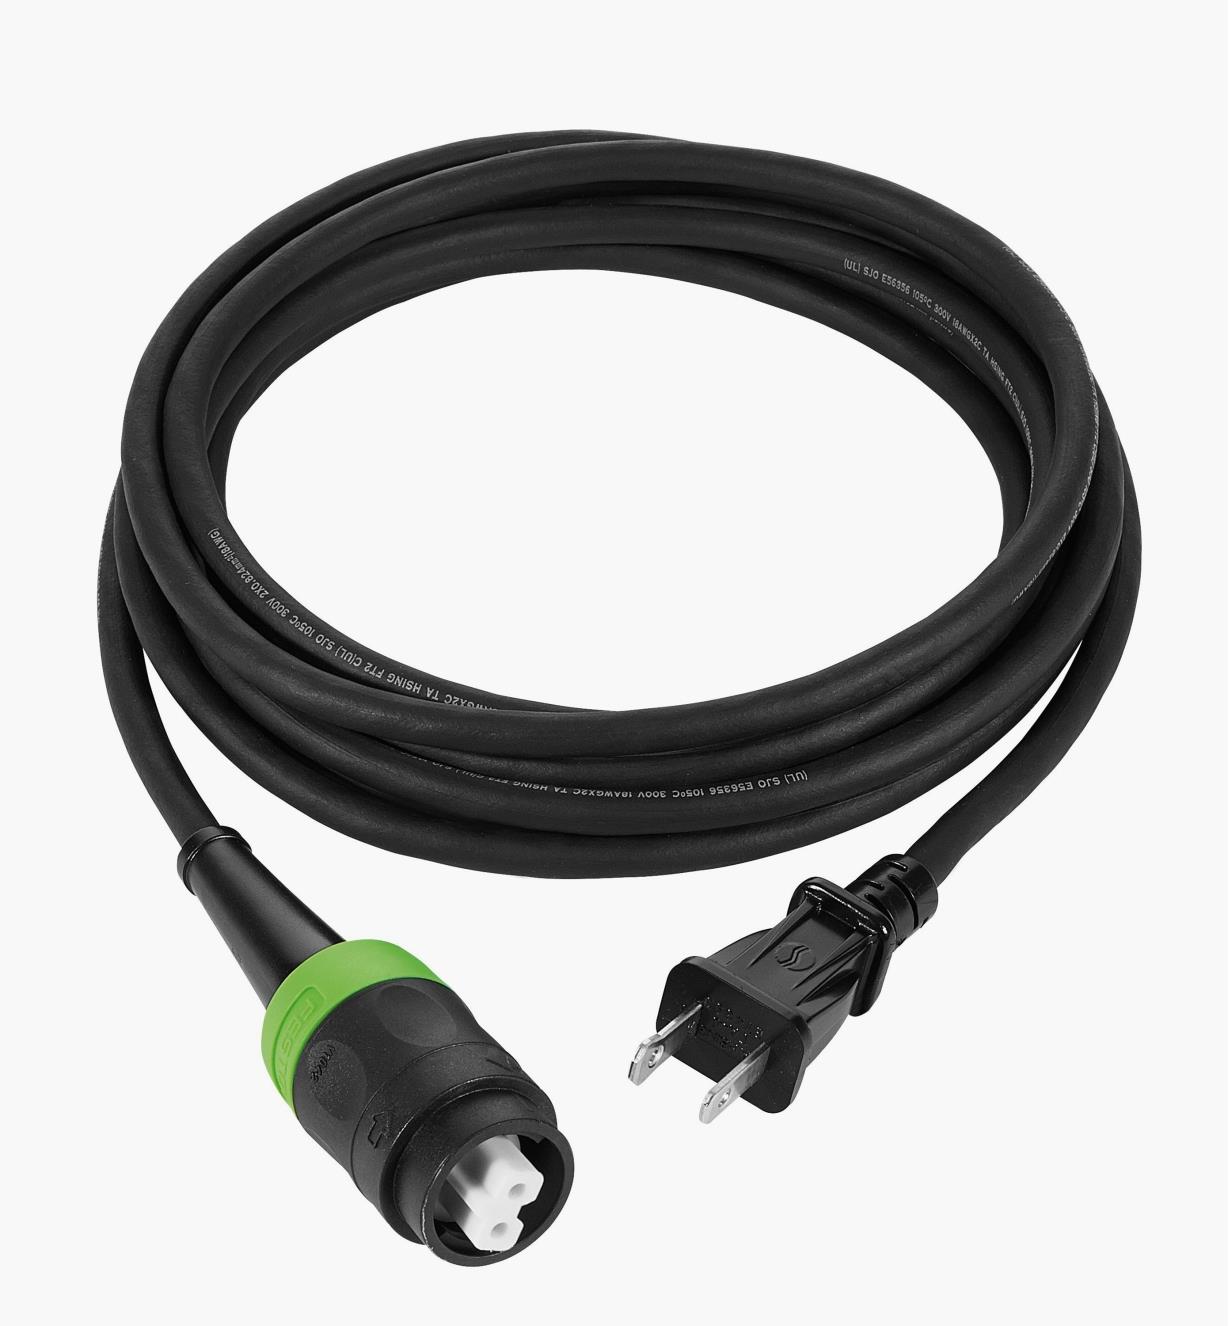 Plug-it Power Cord SJO 18 AWG-4